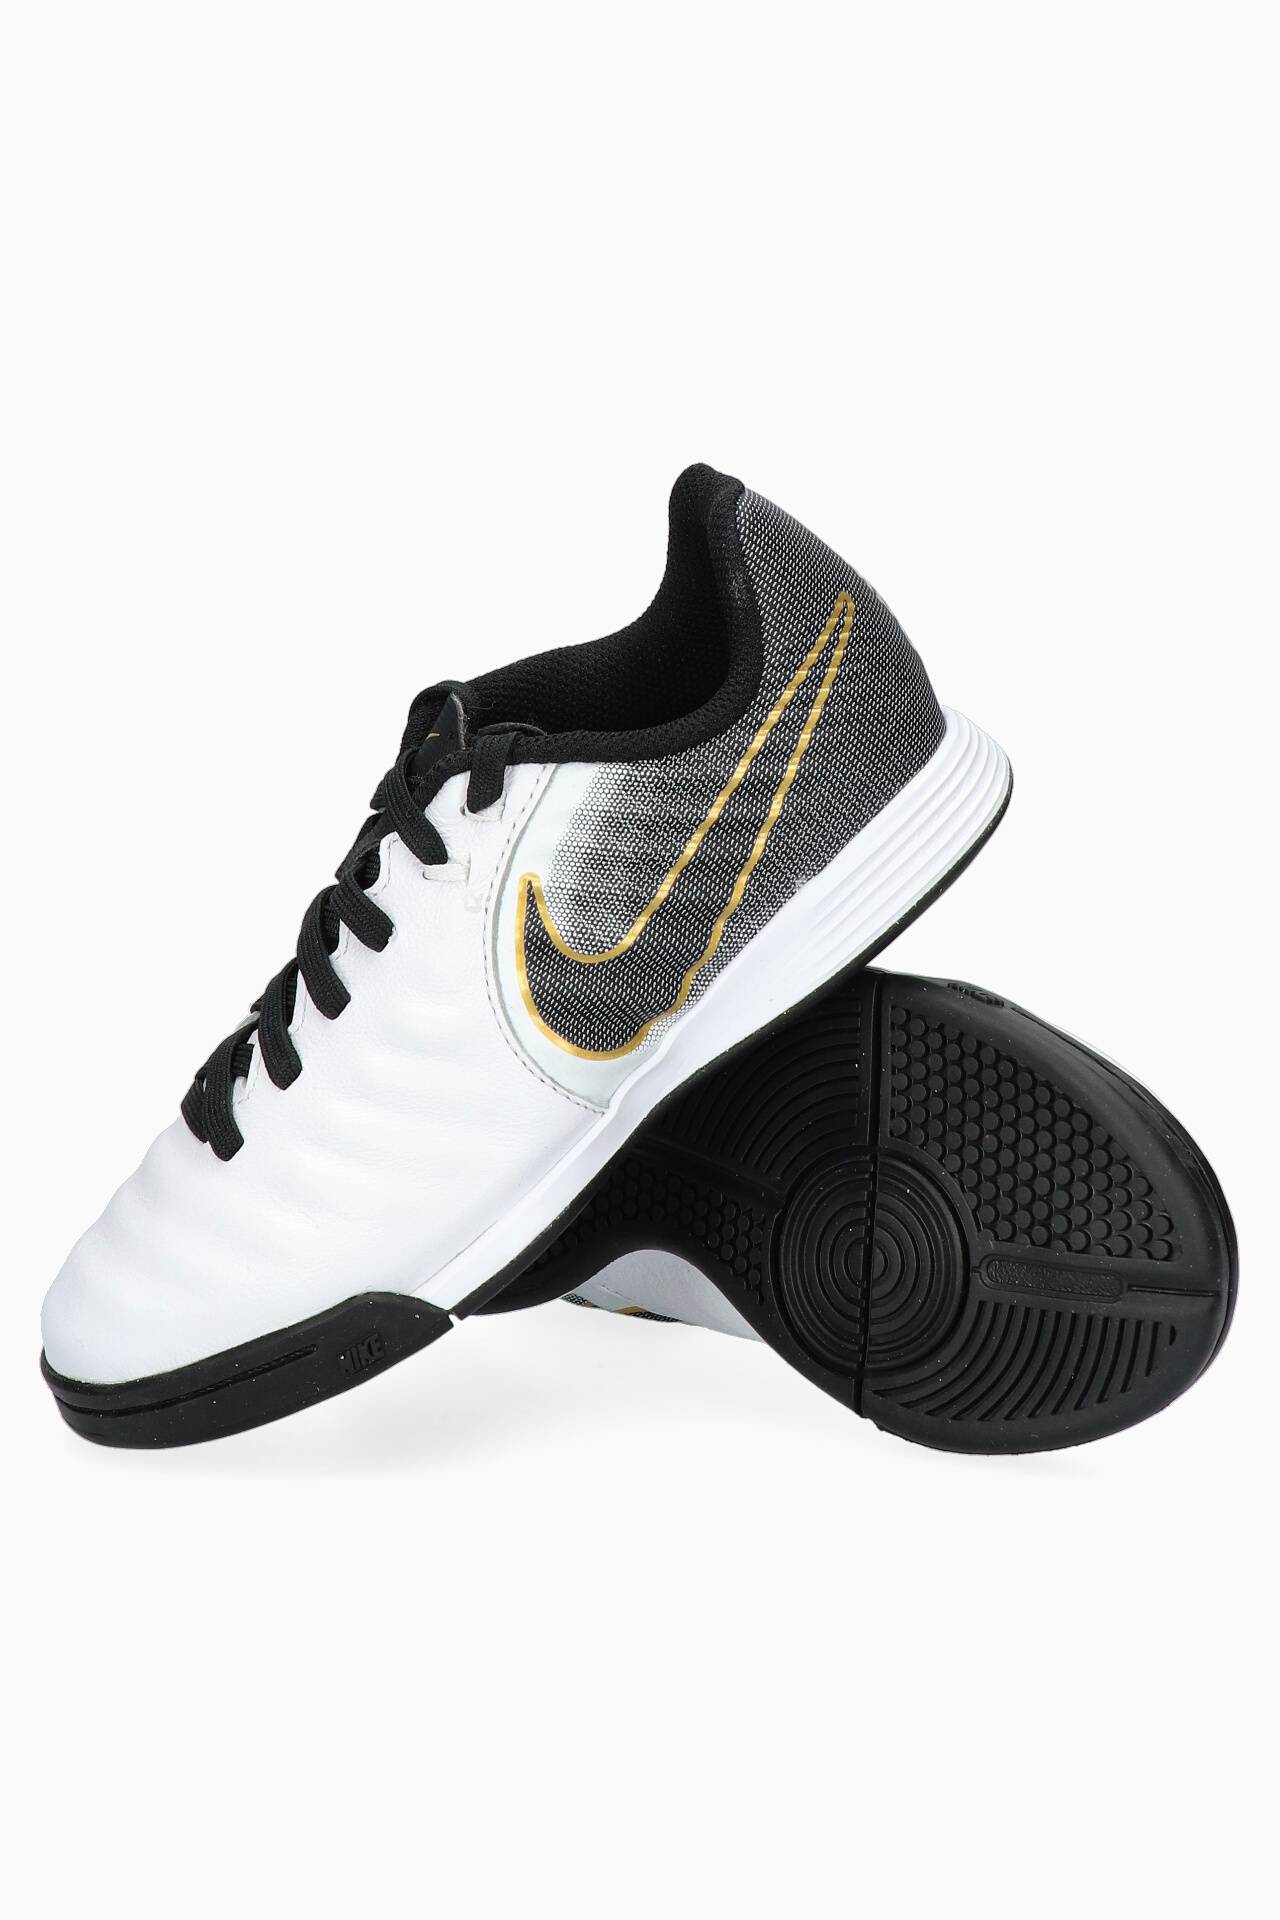 Nike Tiempo Legend Academy IC Junior | R-GOL.com - Football boots & equipment